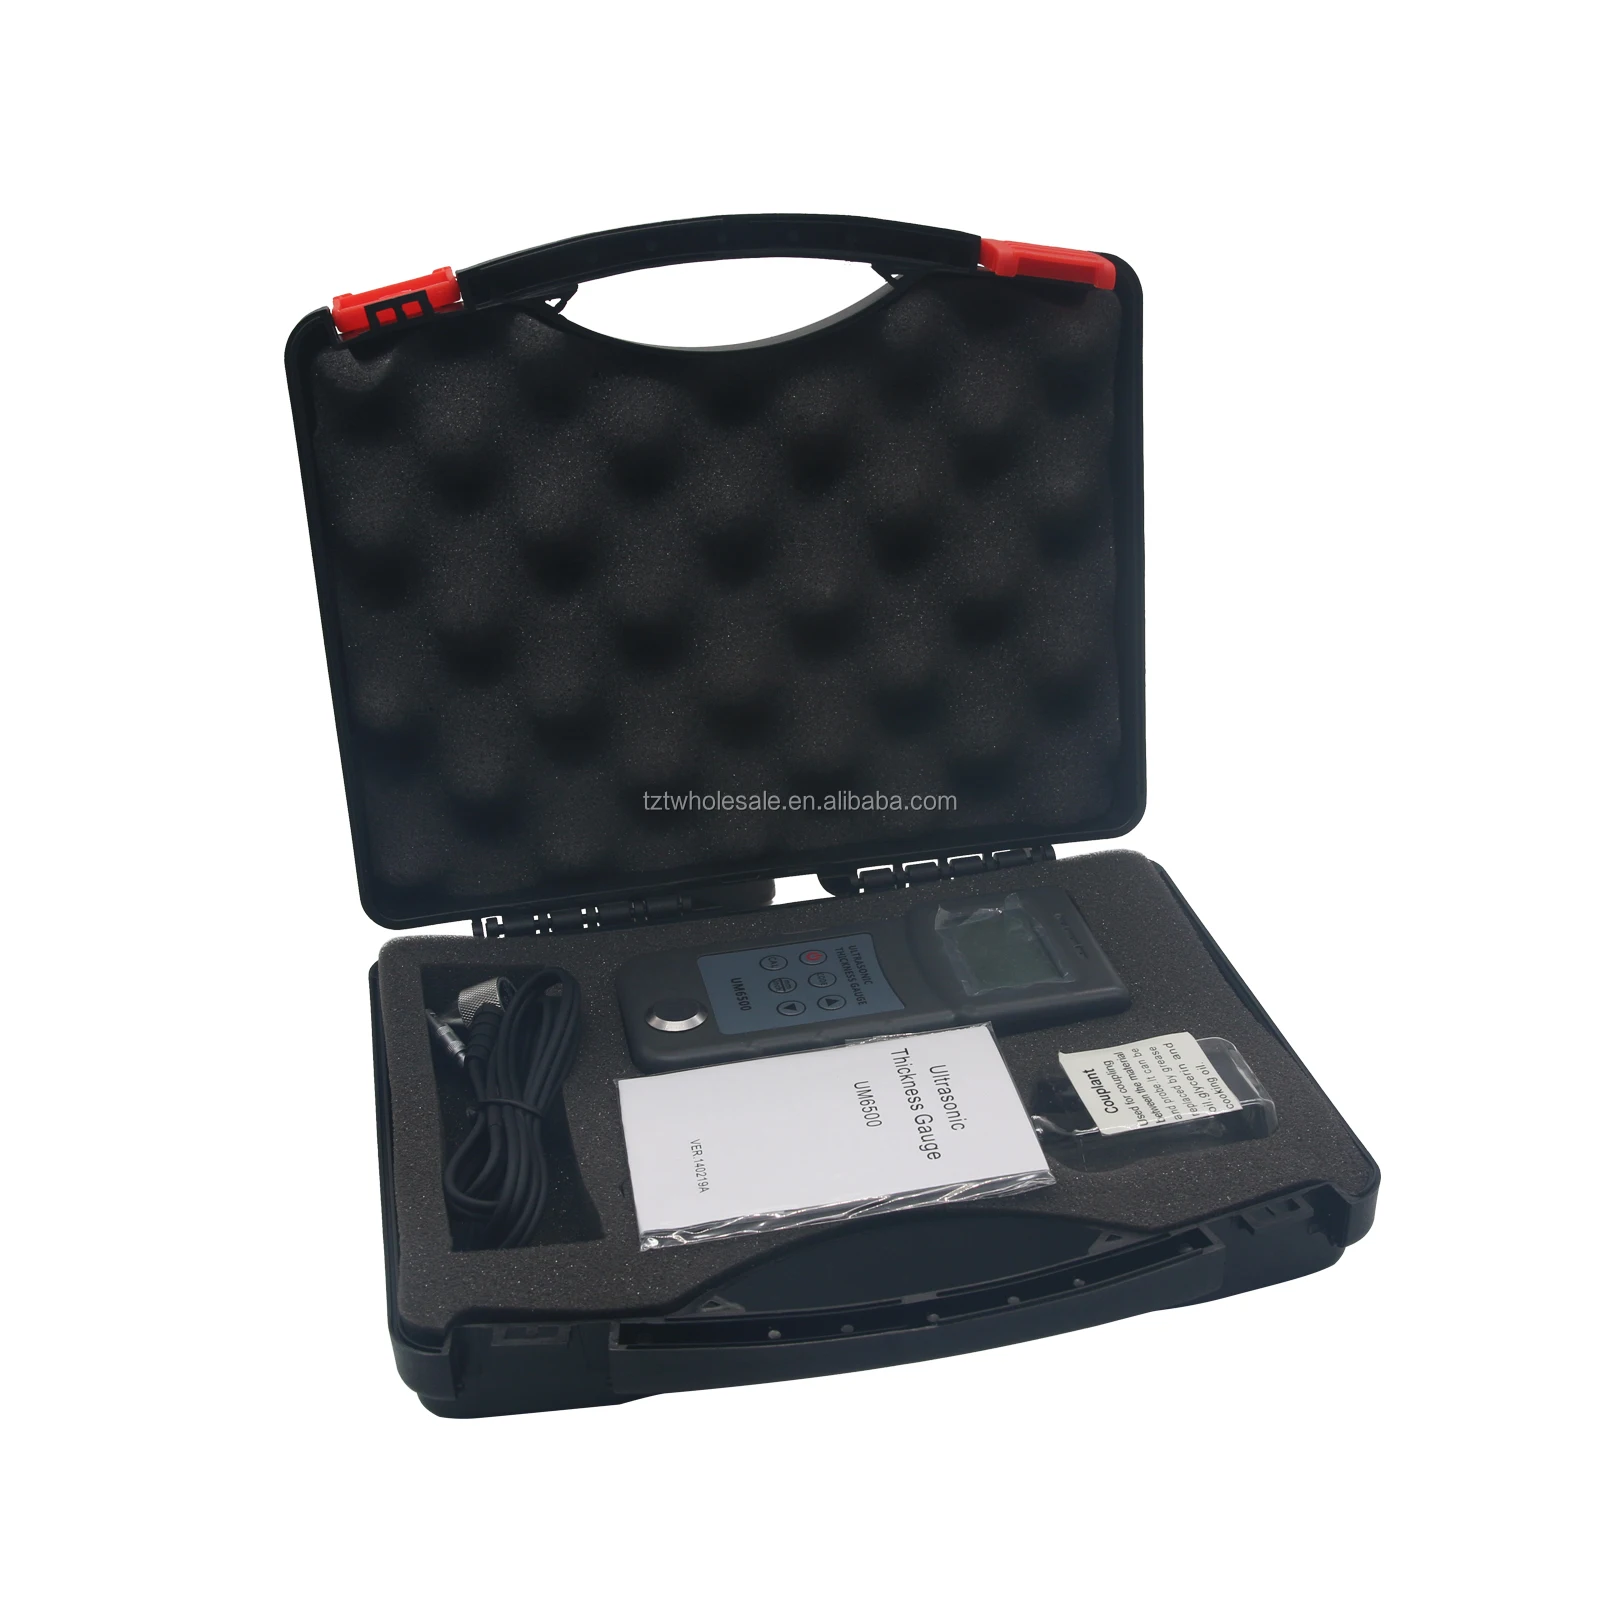 UM6500 Portable Handheld Digital Ultrasonic Thickness Gauge LCD Tester Meter 